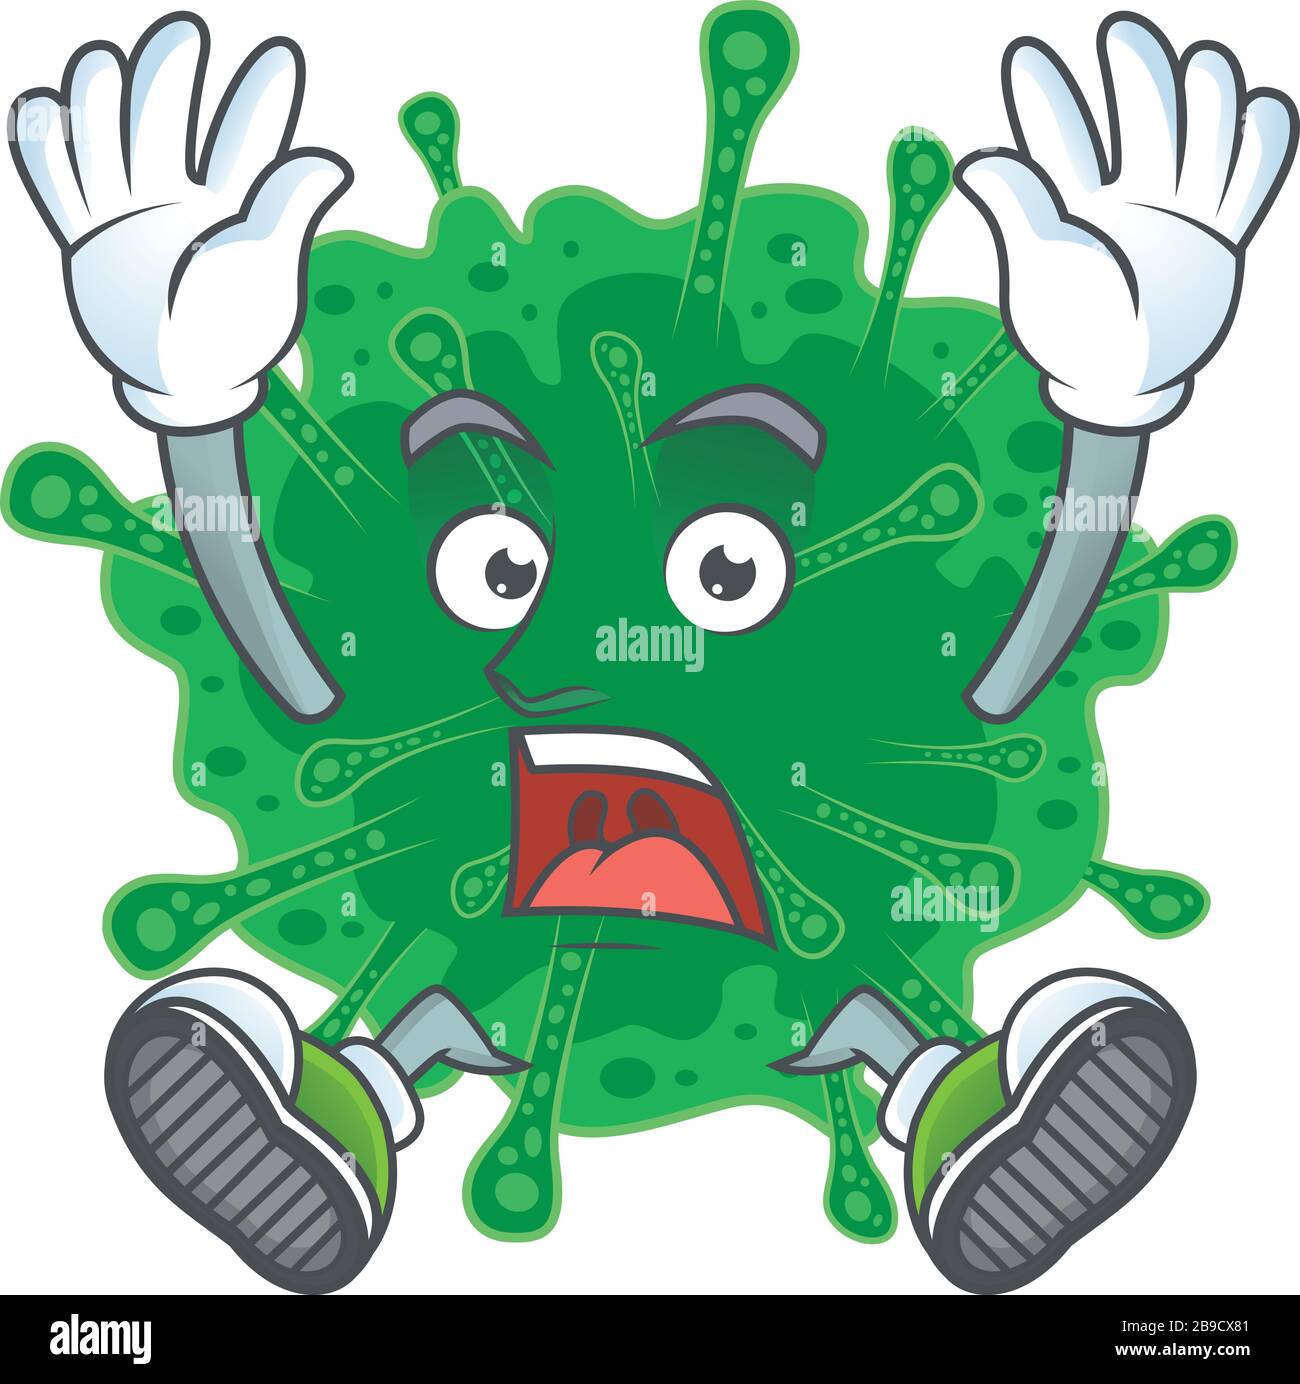 A stunning coronavirus pneumonia cartoon character with happy face Stock Vector